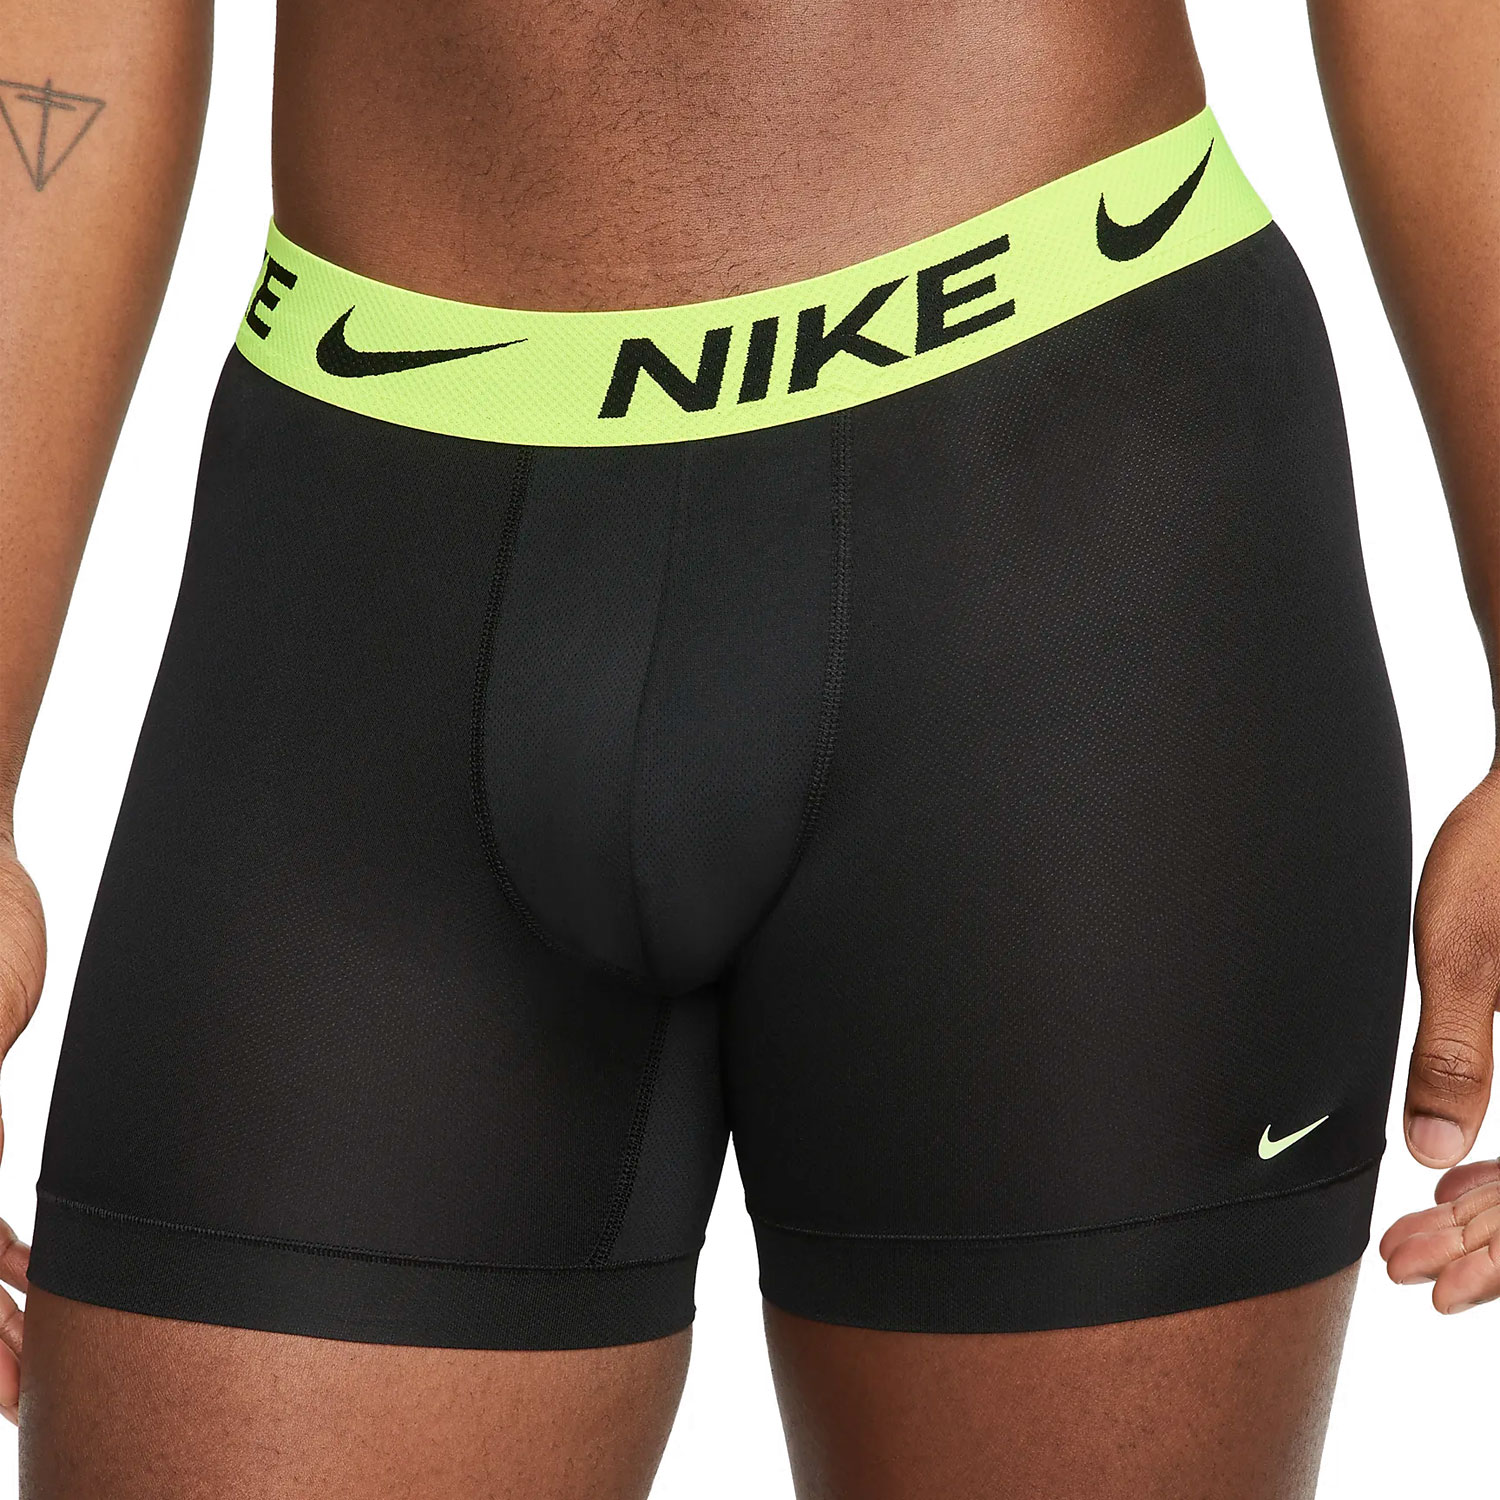 Nike Logo x 3 Men's Underwear Boxer - Black/Volt Wb